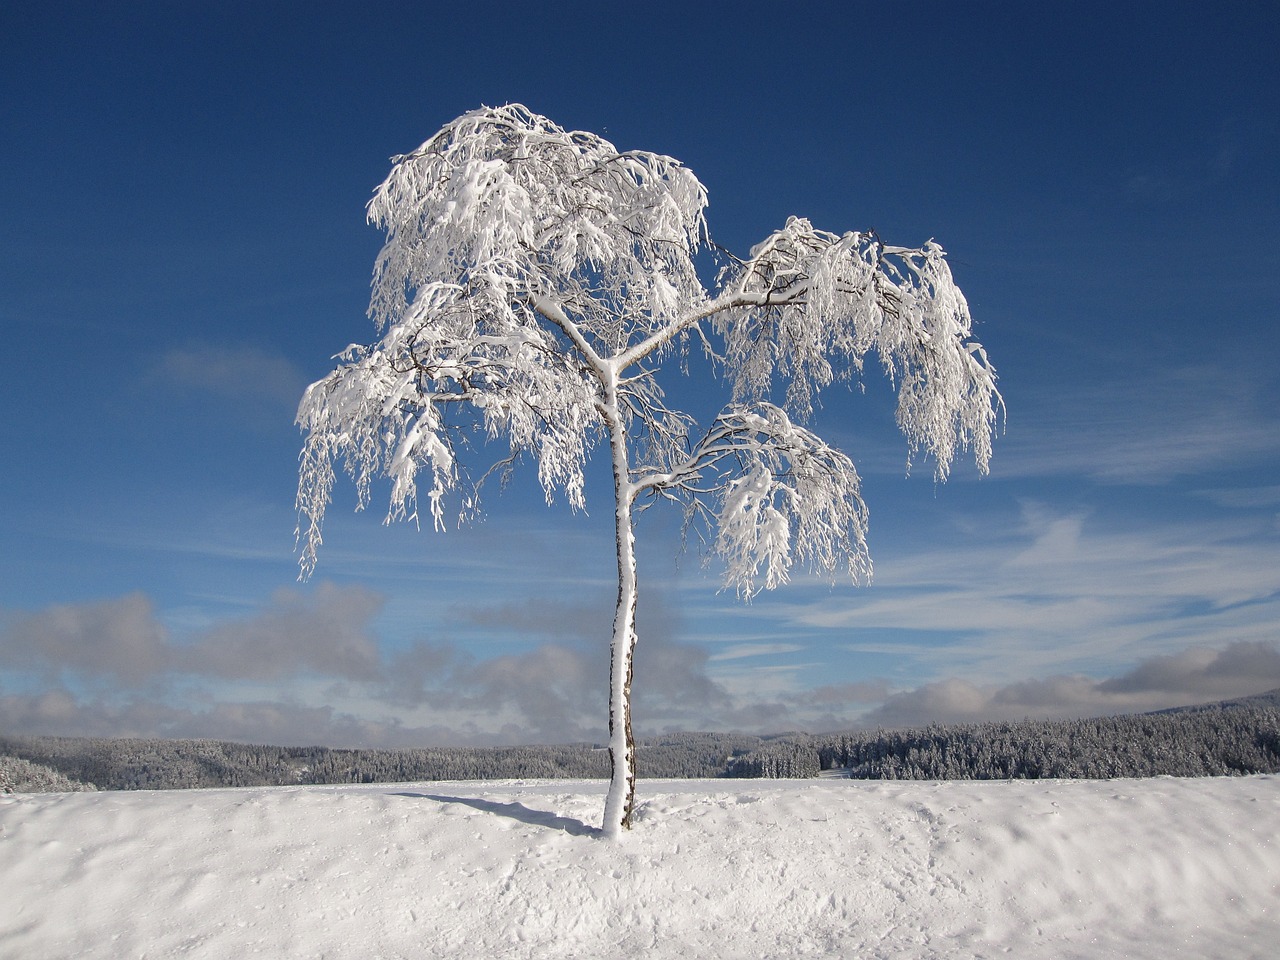 Bild: winter-1675197_1280 (Quelle: pixabay.com)